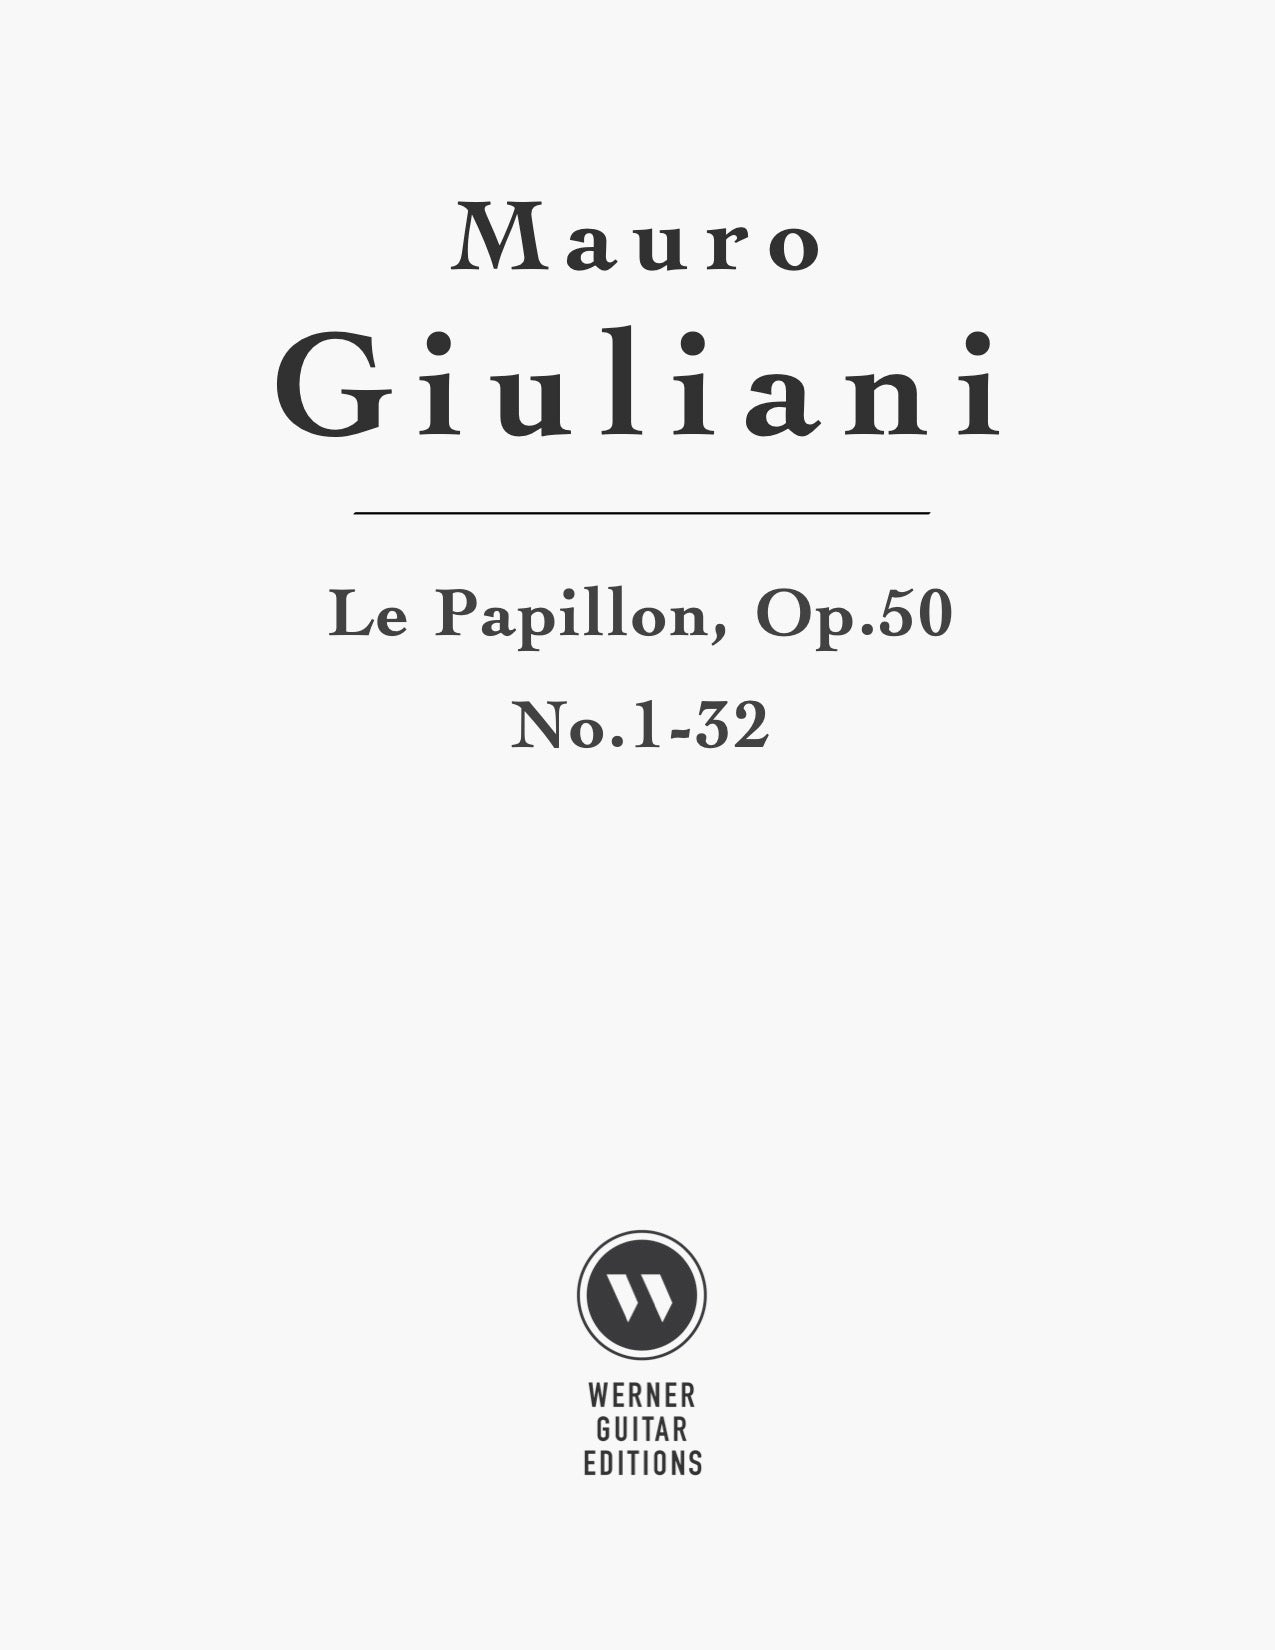 Le Papillon, Op. 50 by Mauro Giuliani 